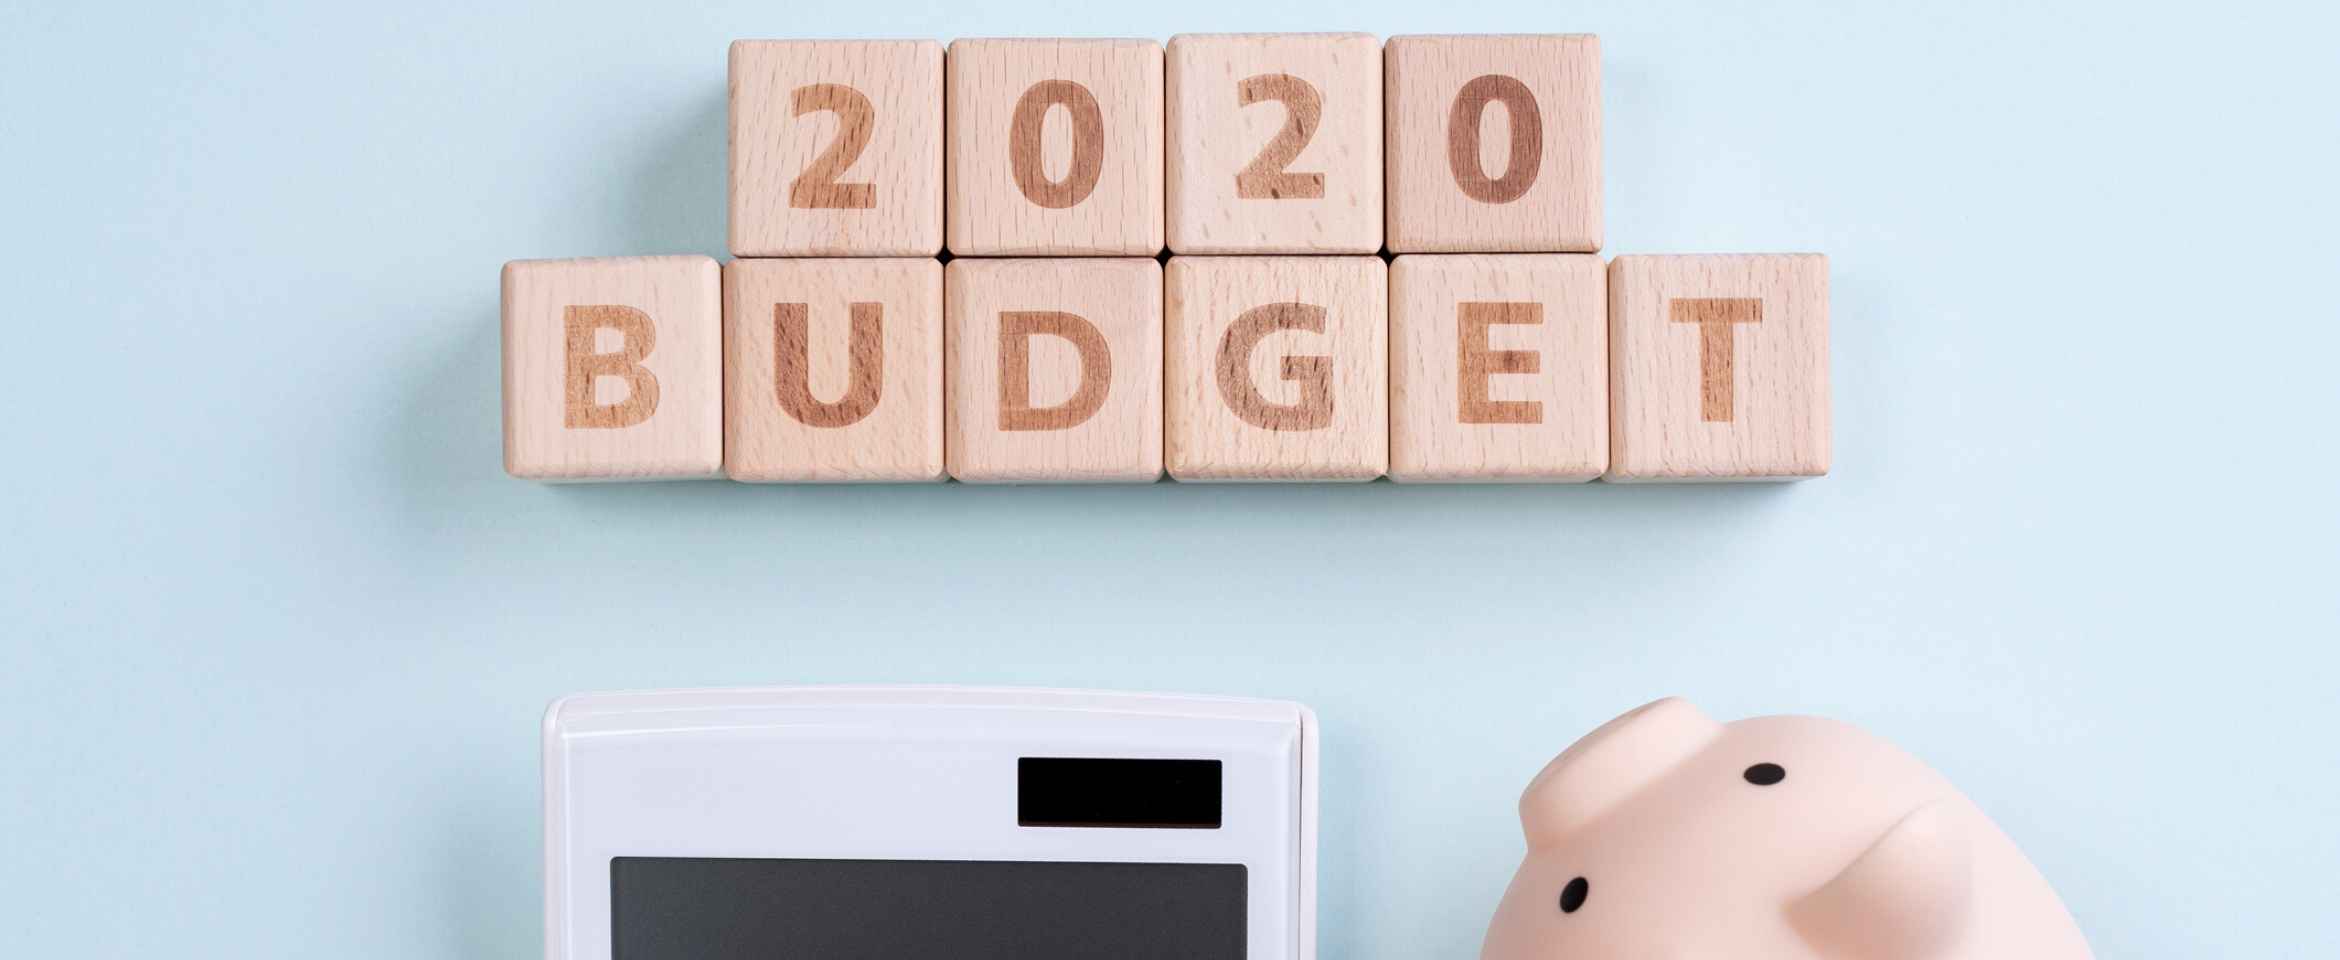 2020 marketing budget: don't forget performance marketing!